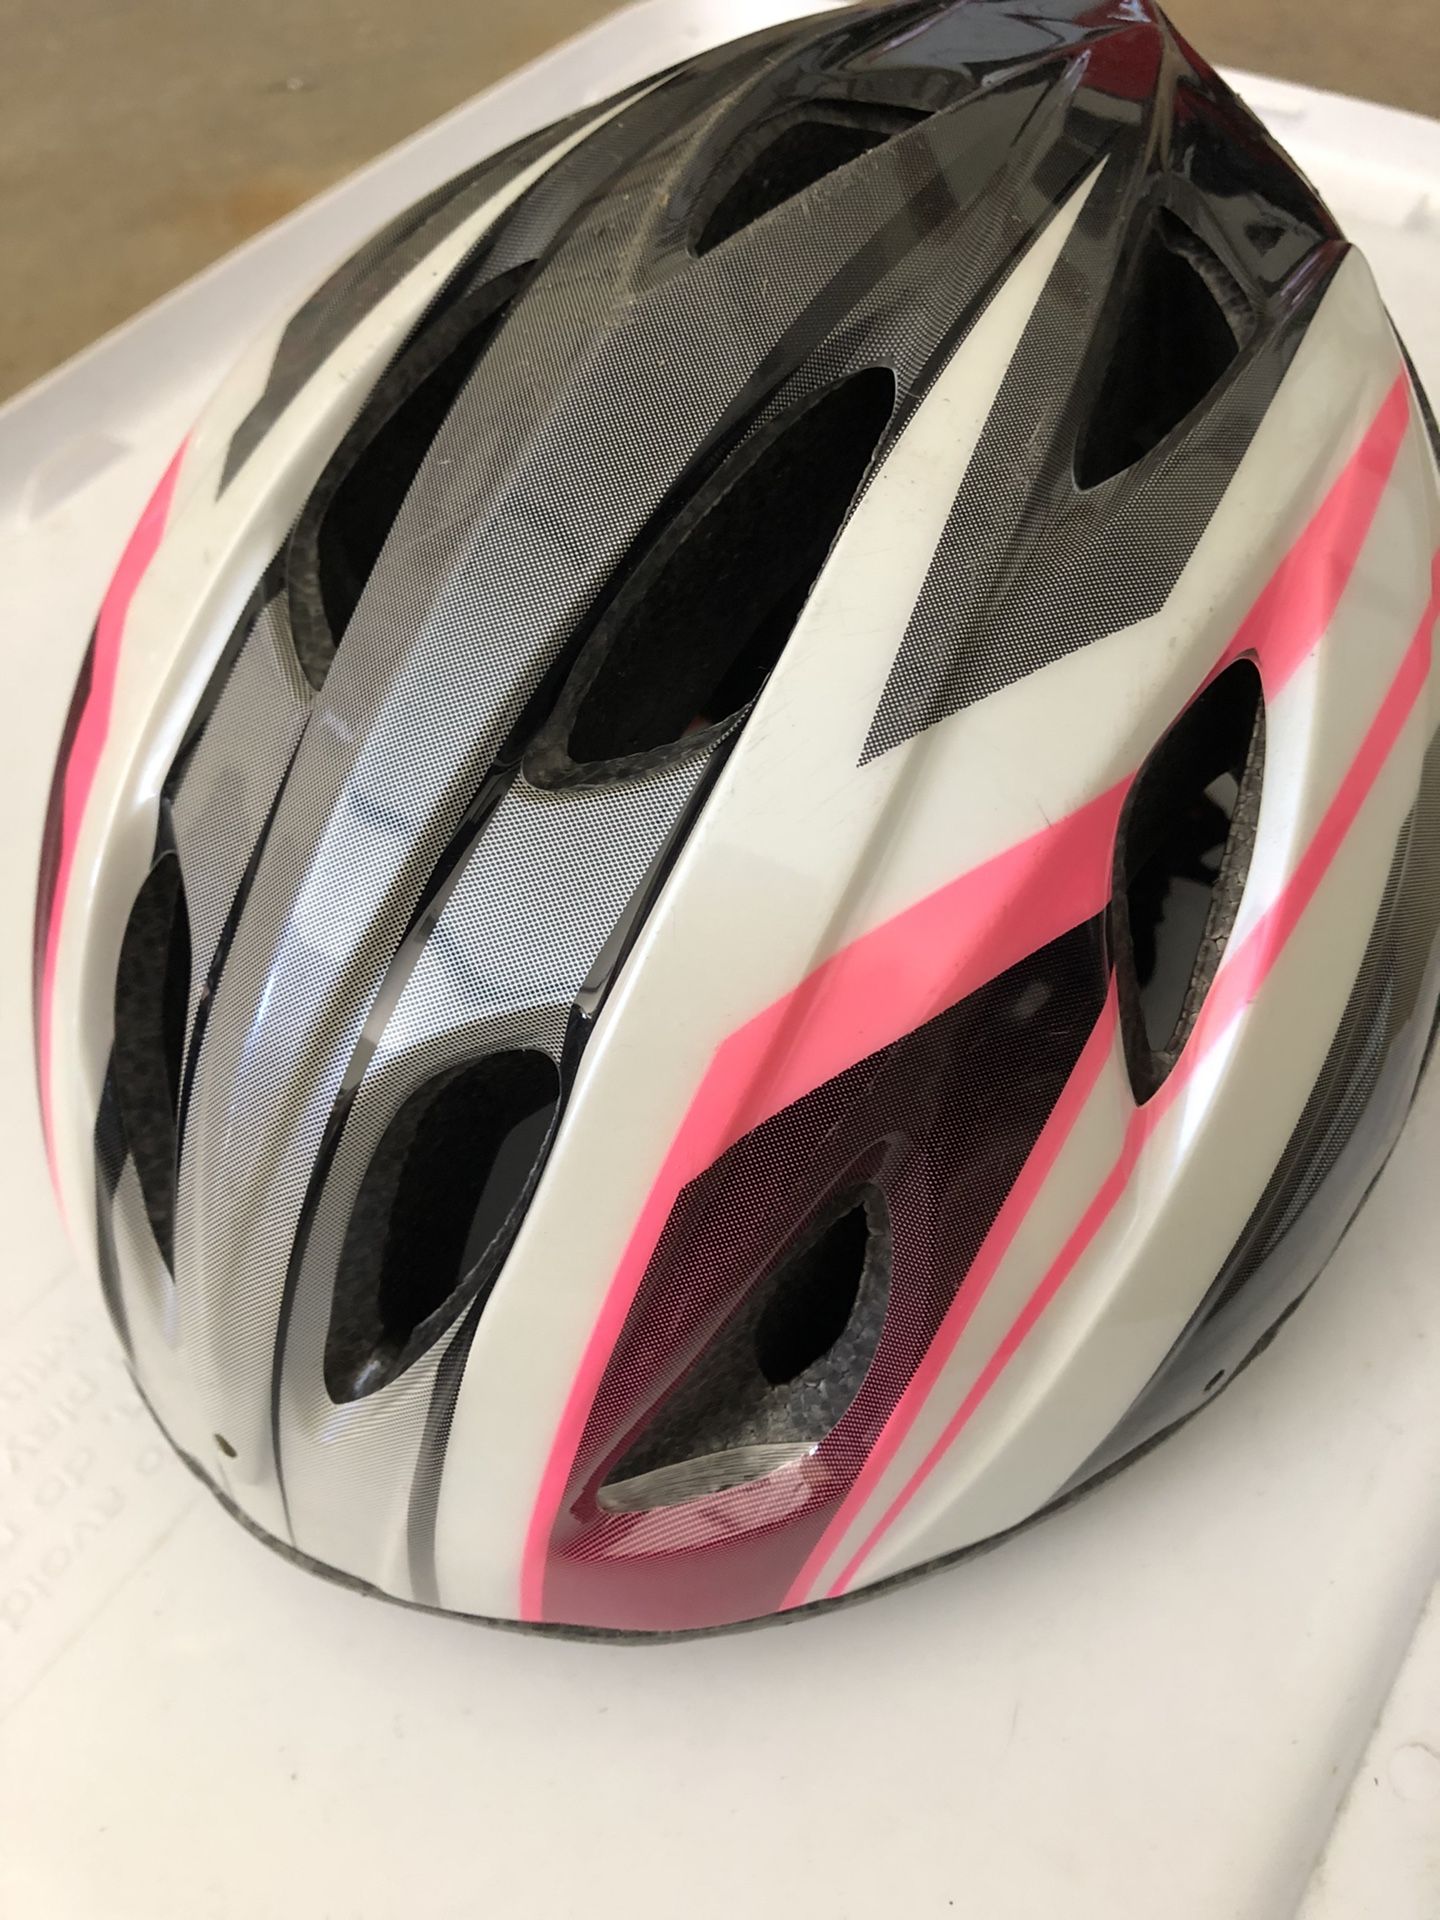 Girls Youth Bike Helmet Size 11/16, 54-58 cm